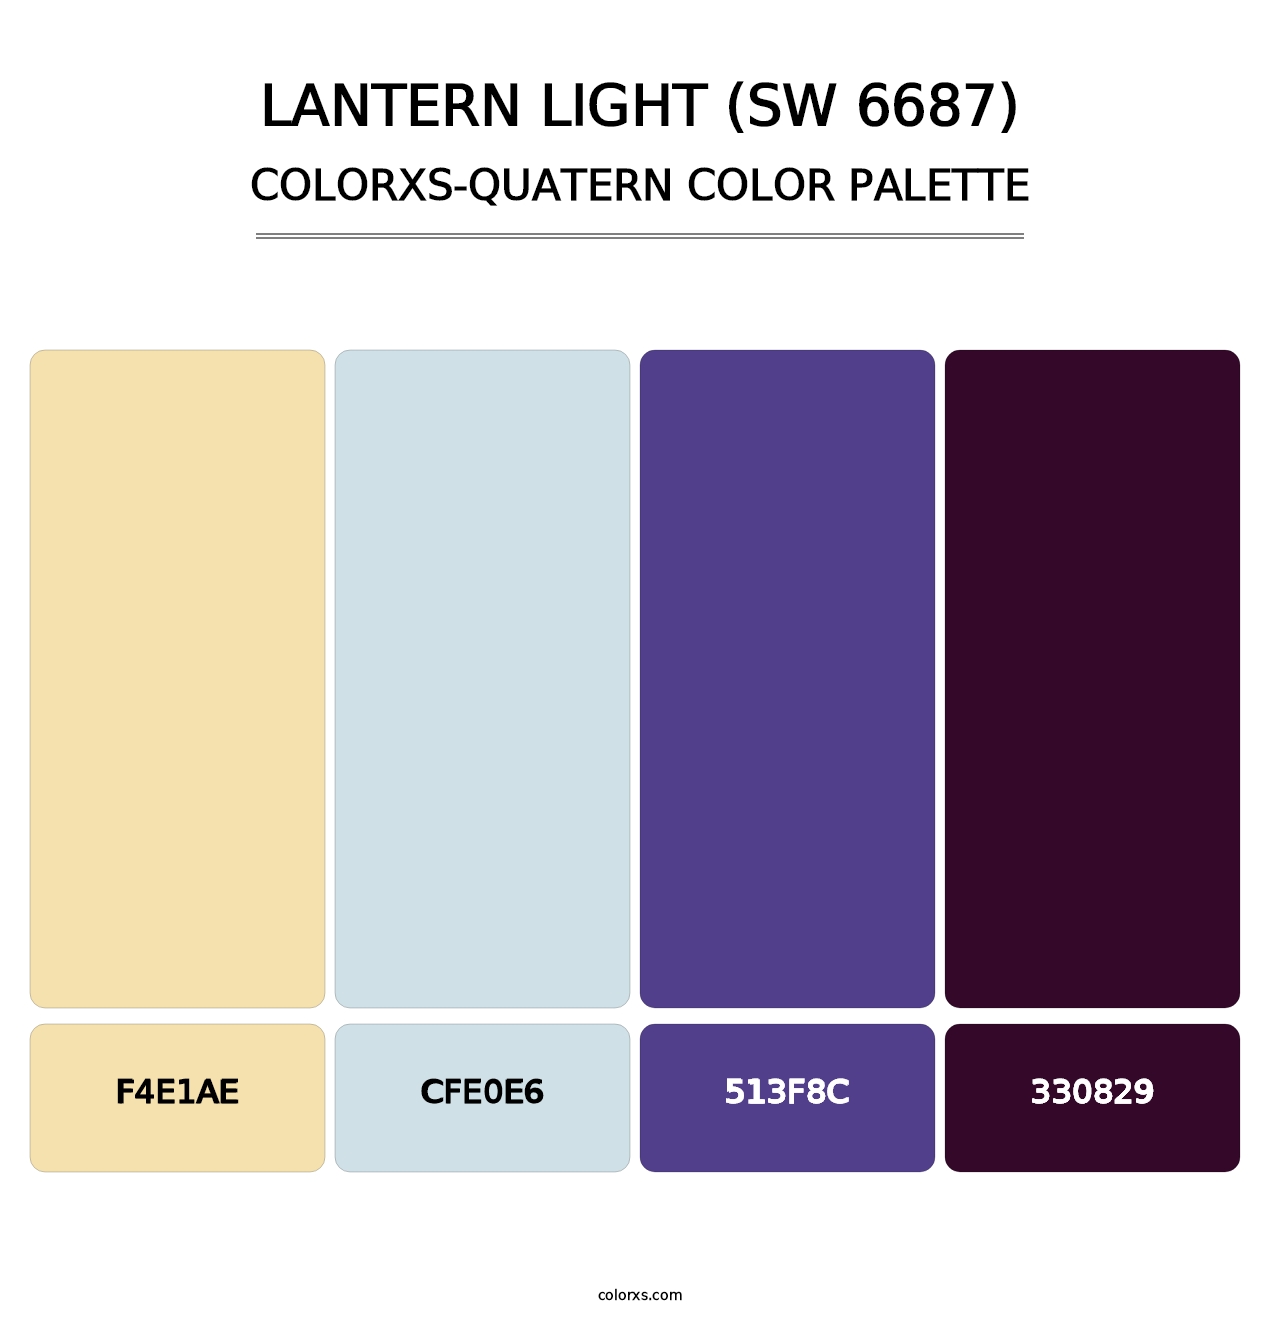 Lantern Light (SW 6687) - Colorxs Quatern Palette